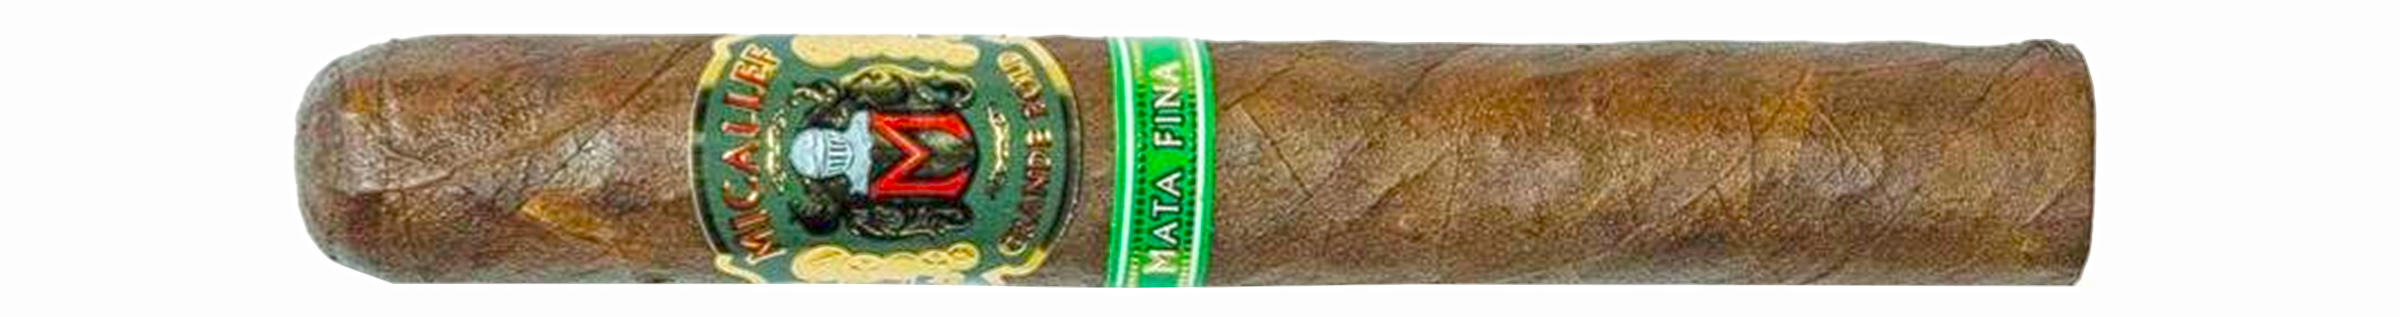 A cigar with Micallef Grande Bold Mata Fina label